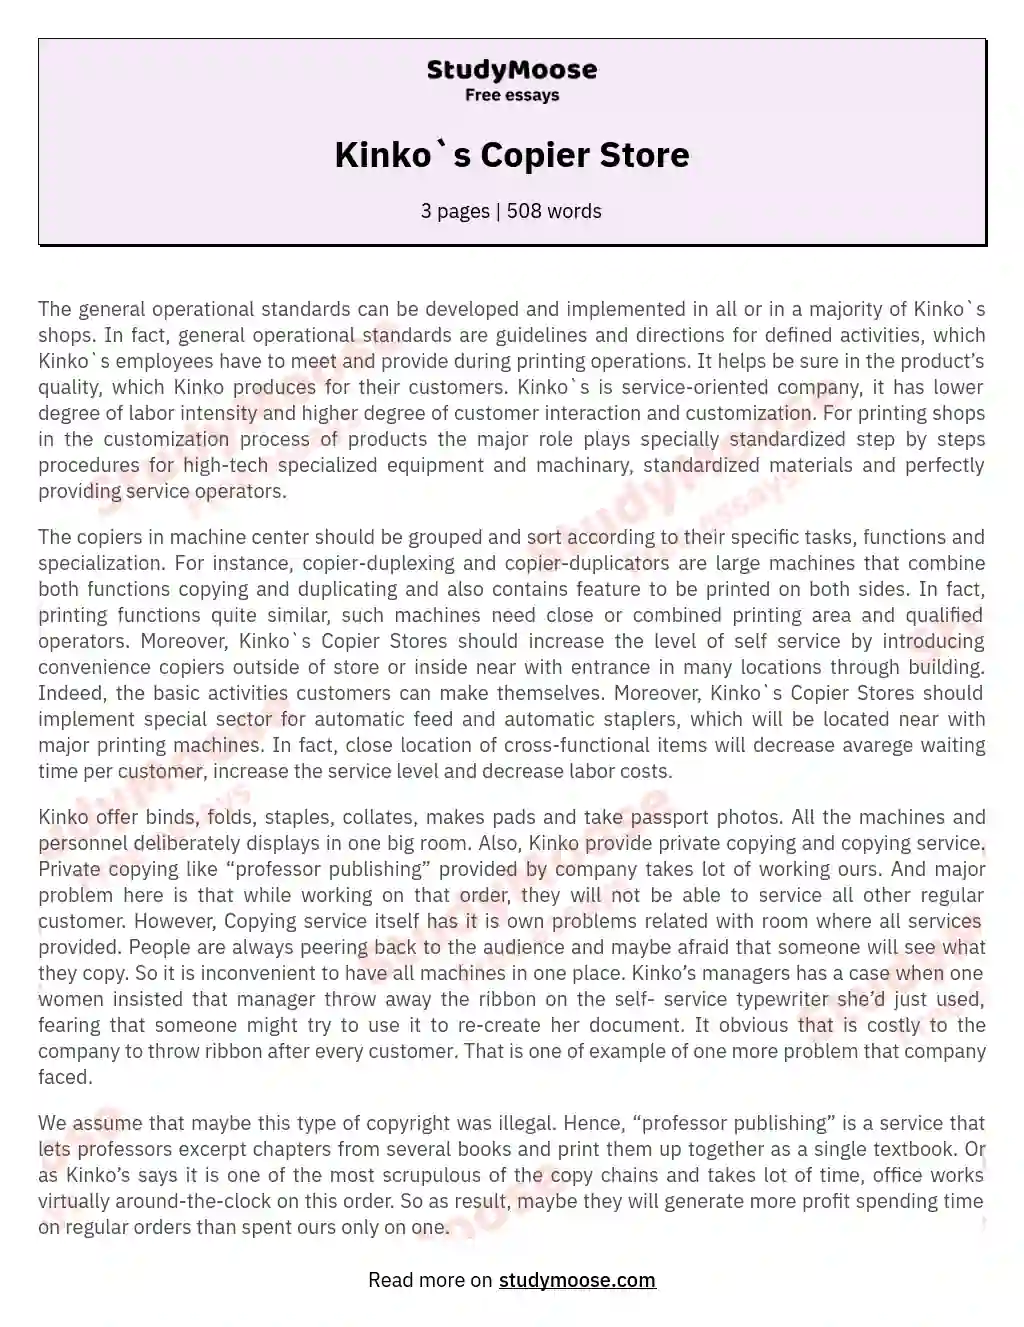 Kinko`s Copier Store essay